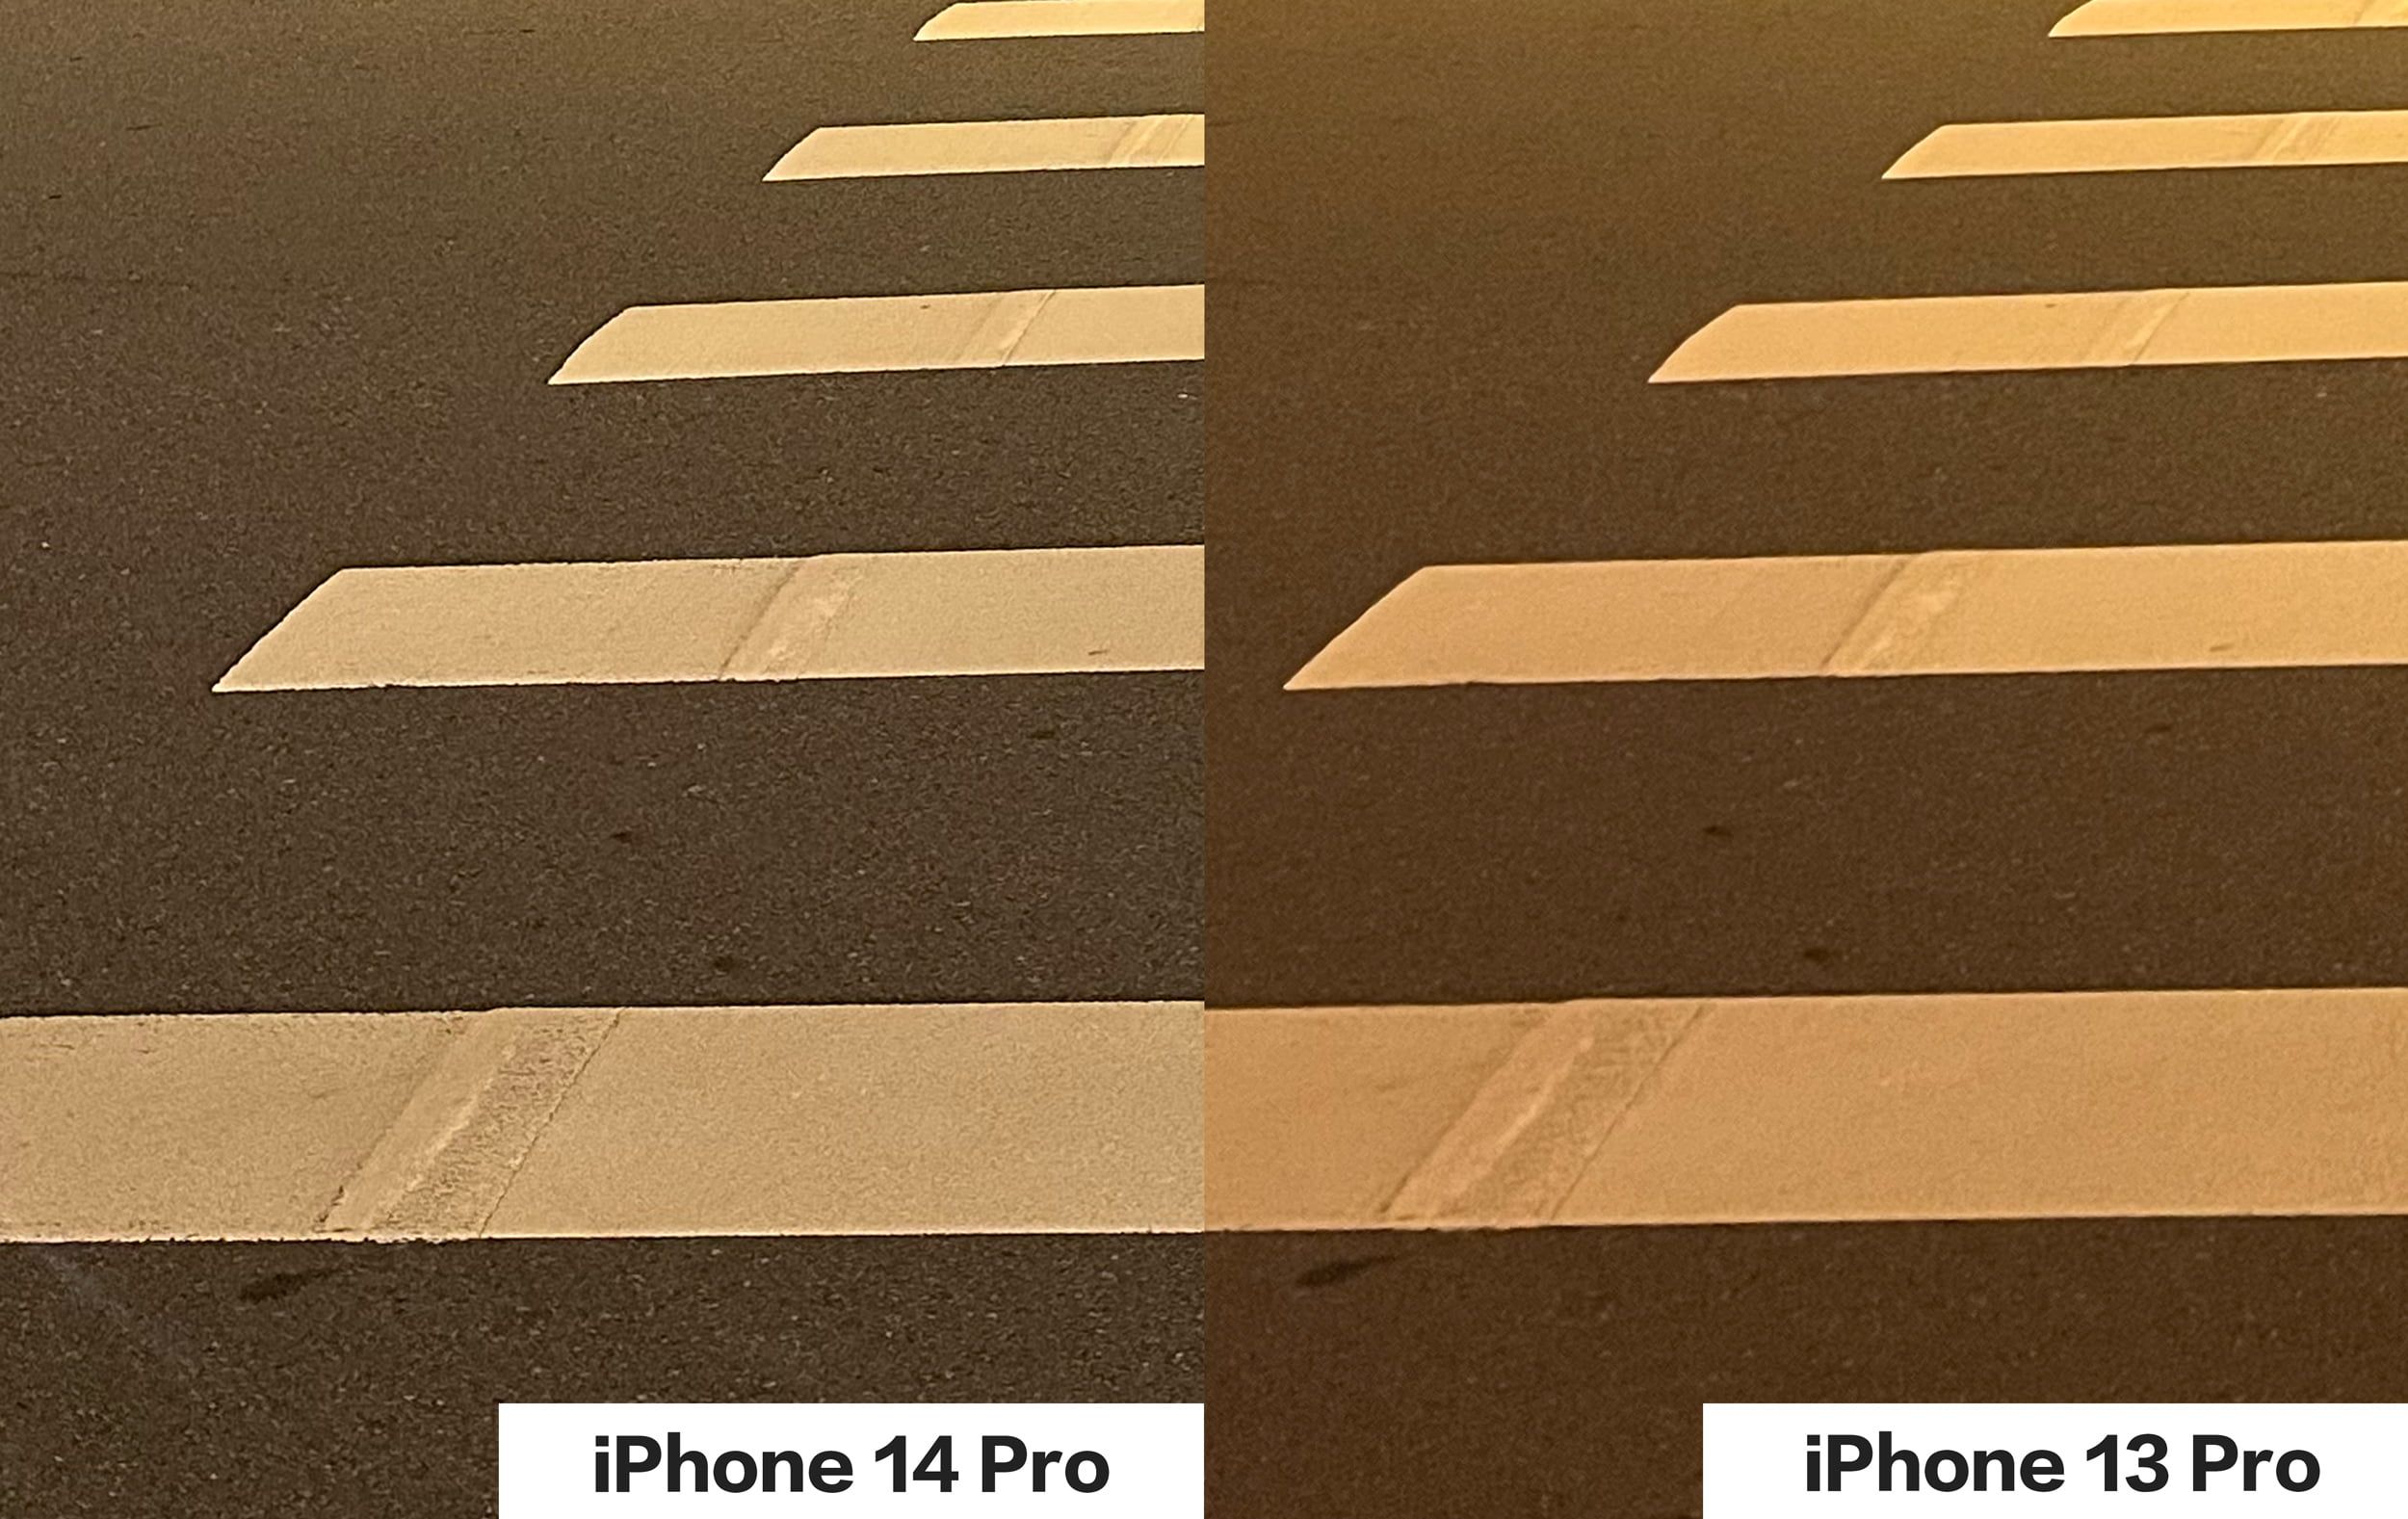 iPhone 14 Pro night shot comparison actual measurement 7